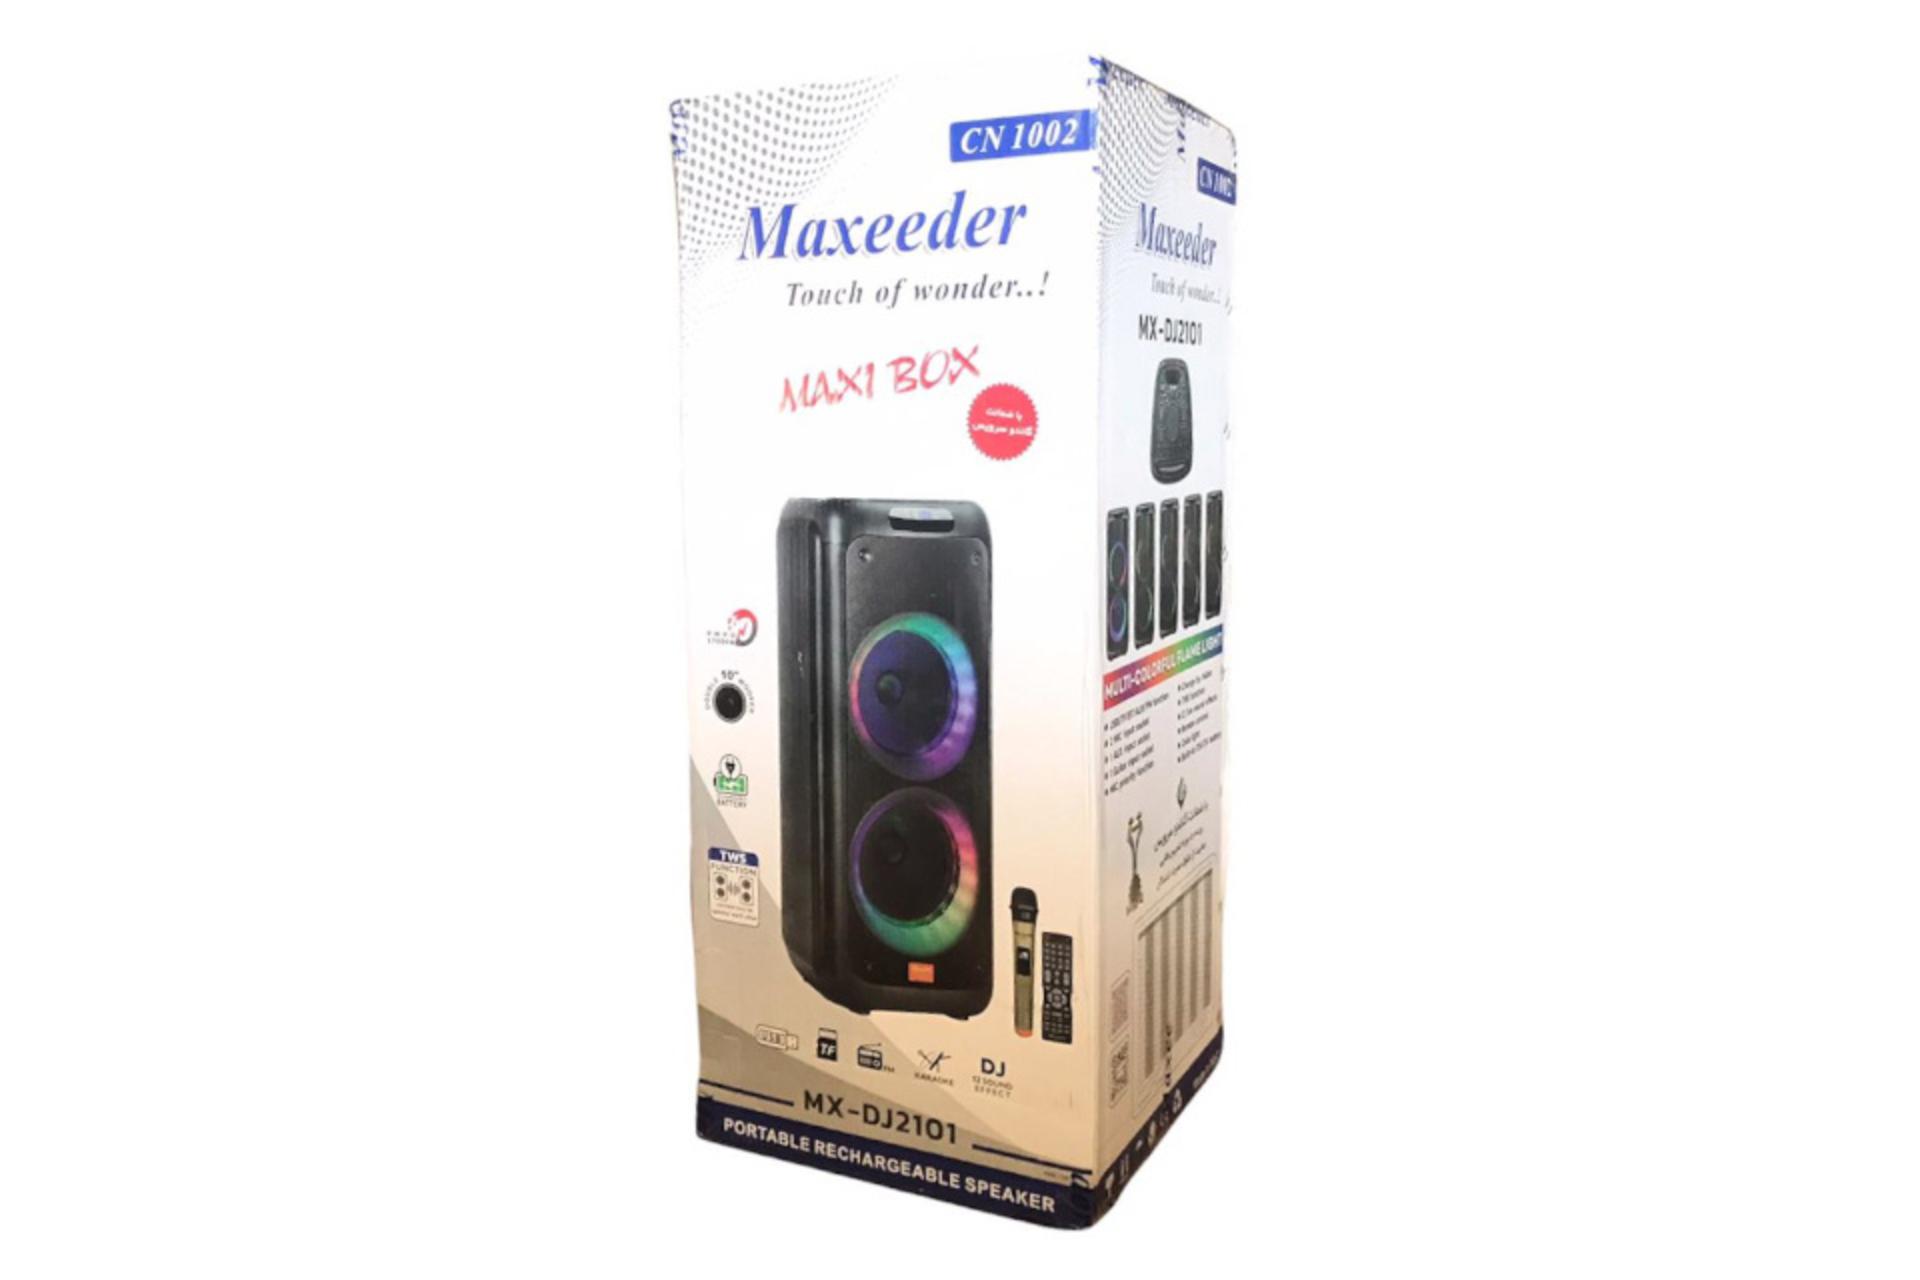 جعبه اسپیکر مکسیدر Maxeeder MX-DJ2101 CN1002